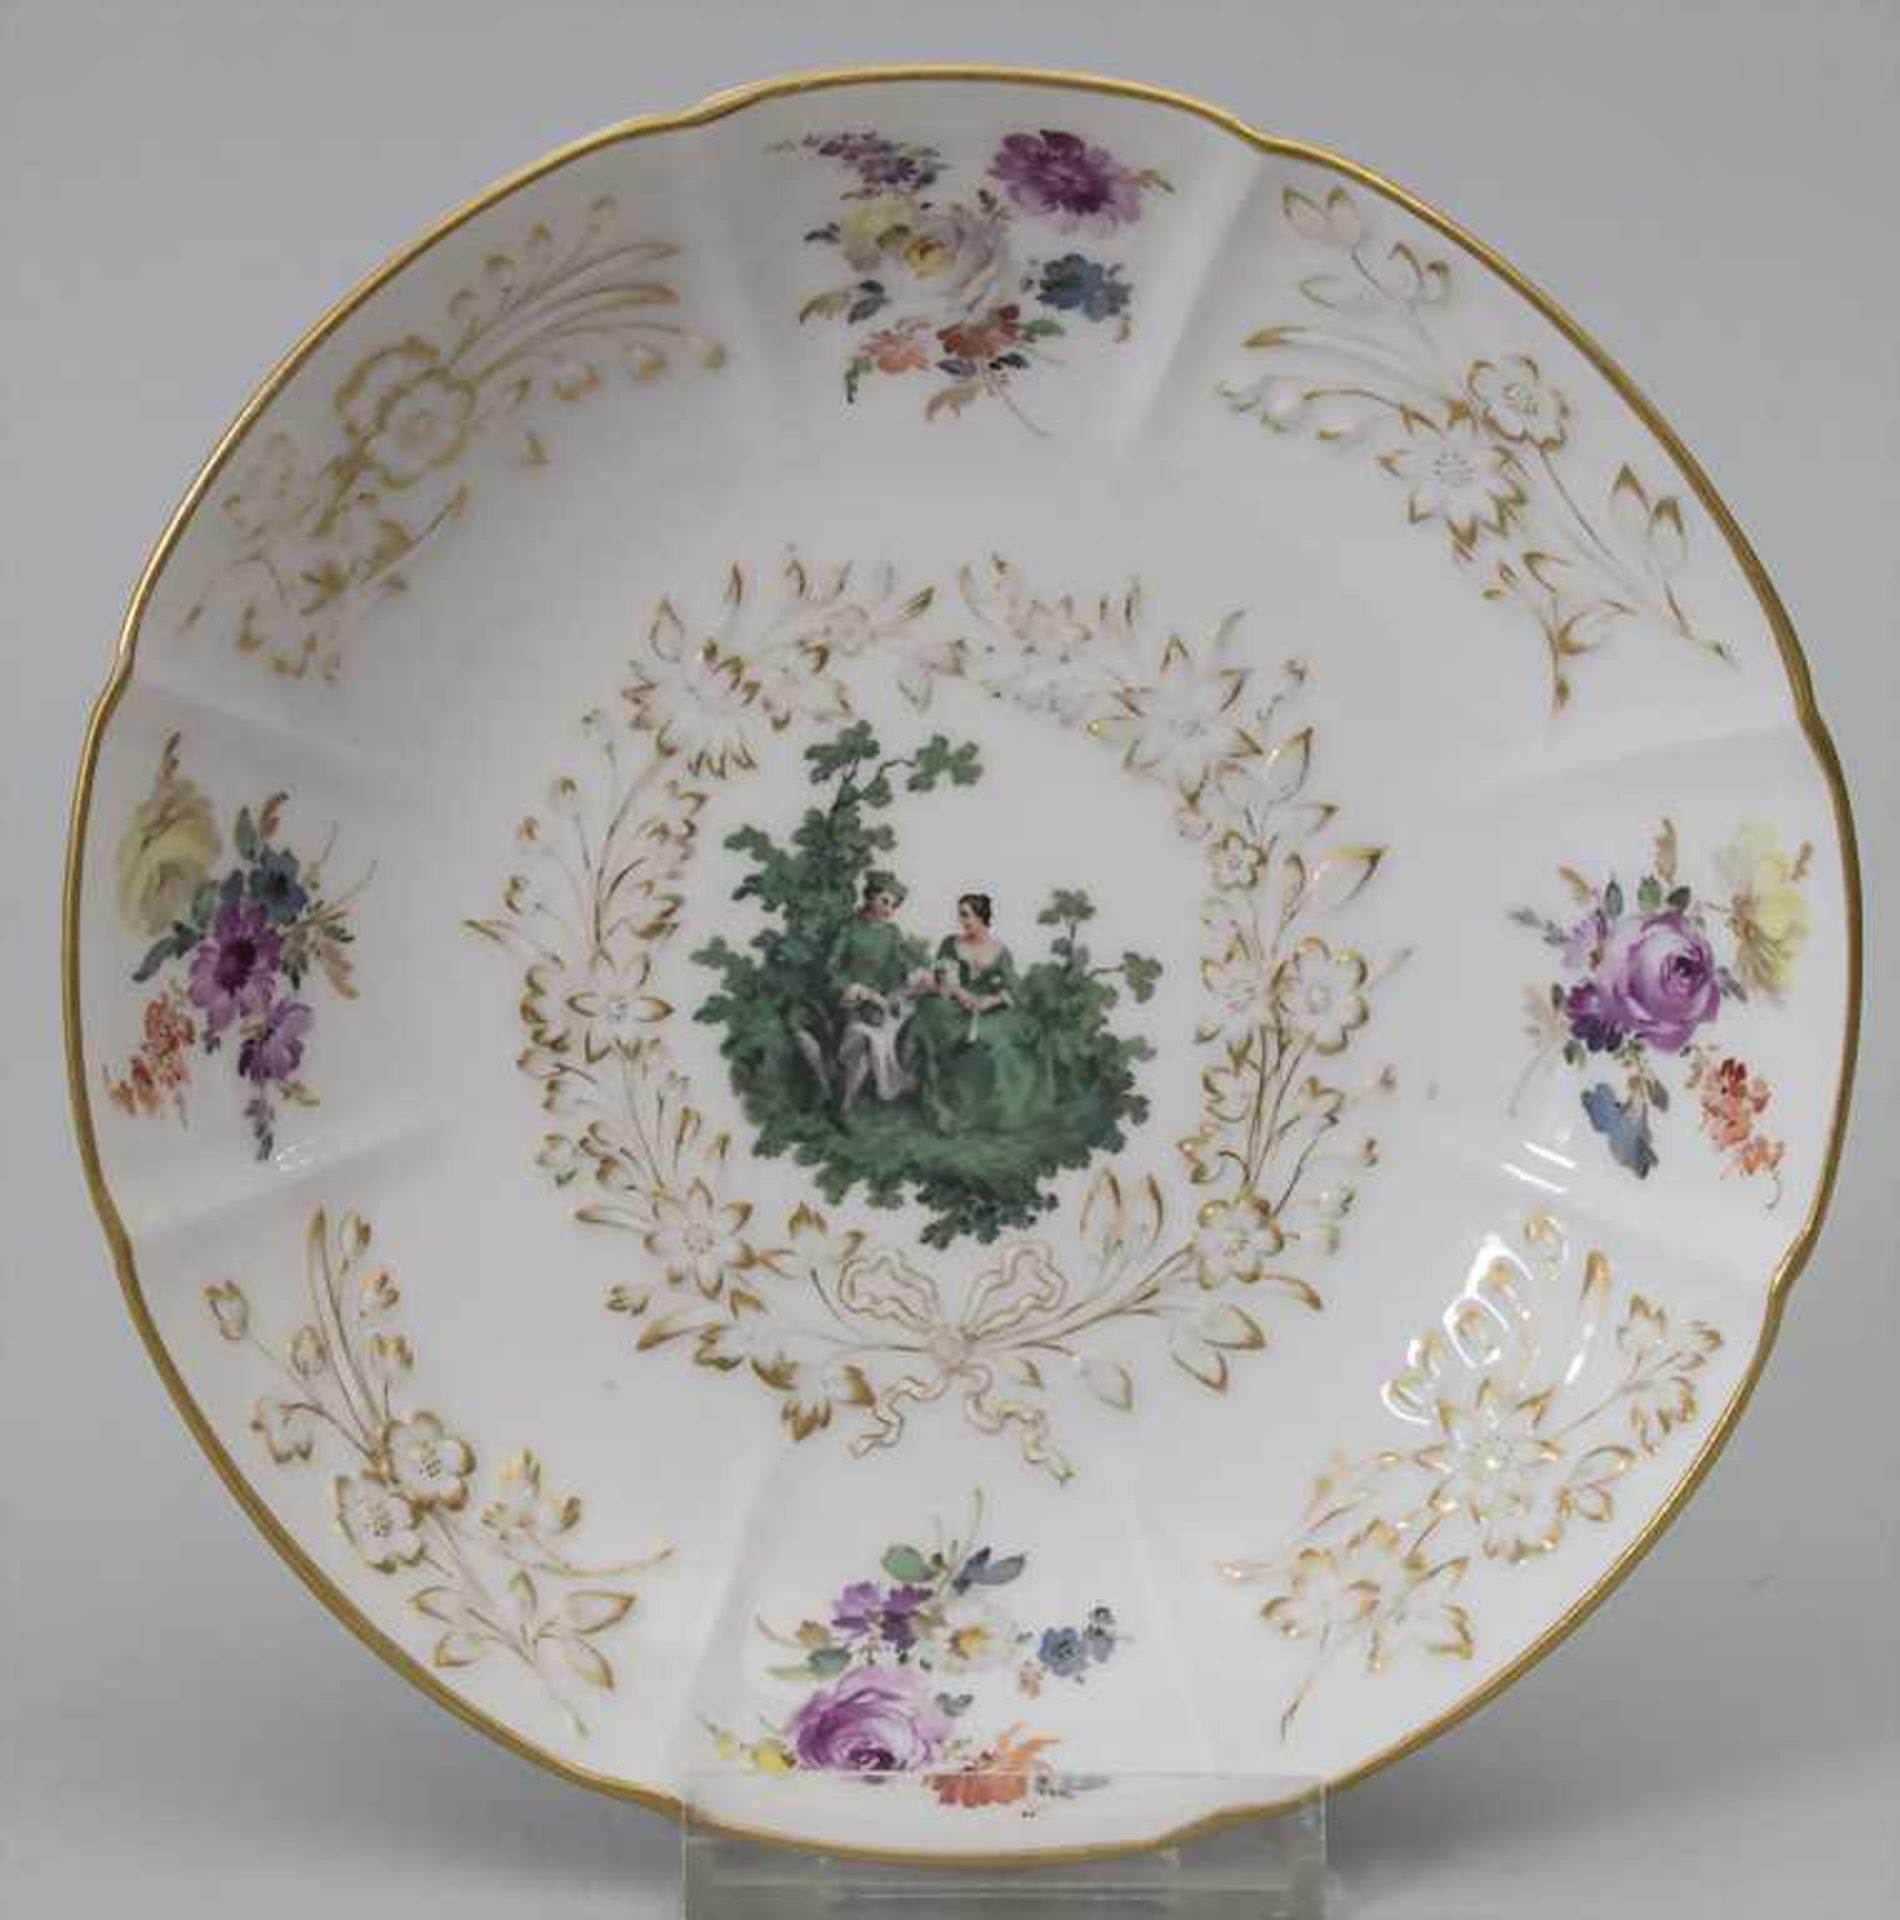 Zierteller / A decorative plate, Meissen, 19. Jh.